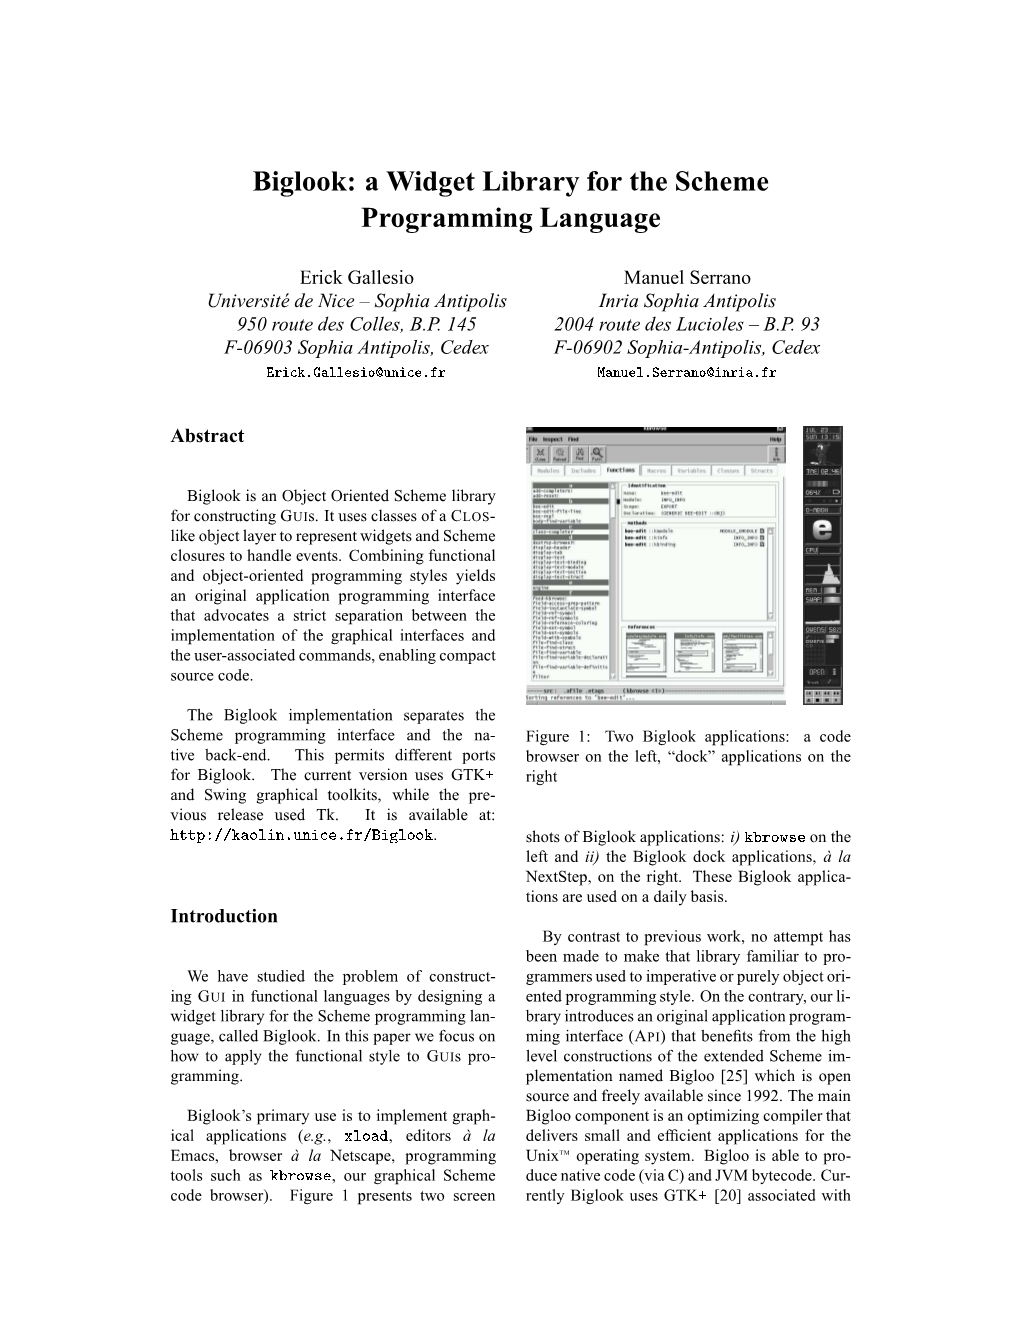 Biglook: a Widget Library for the Scheme Programming Language